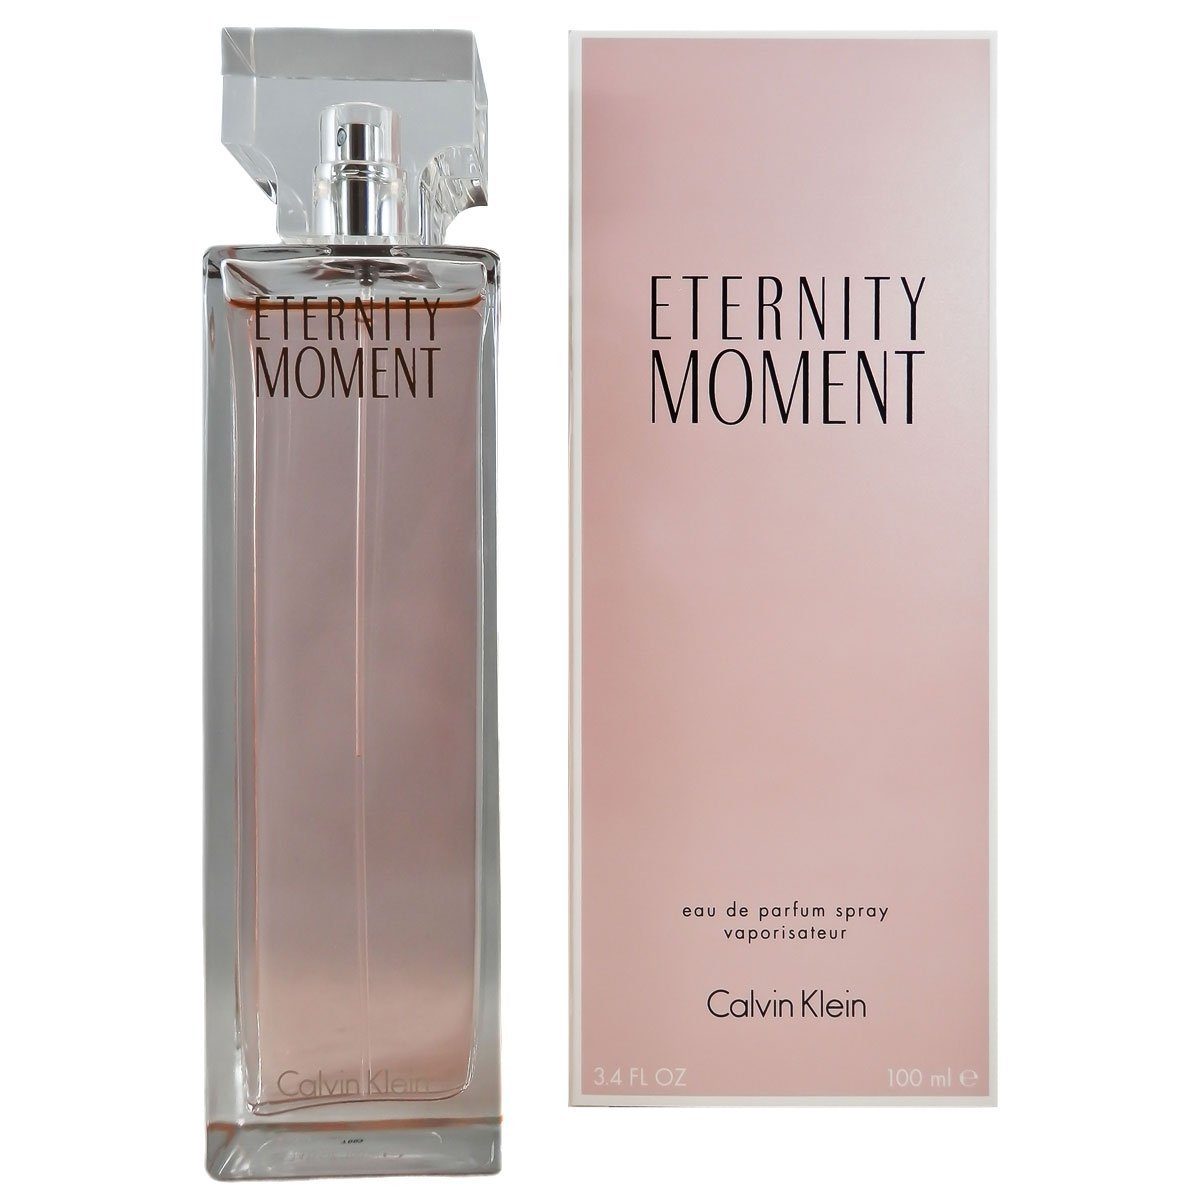 Perfume Eternity Moment de Calvin Klein Scarlett Johansson